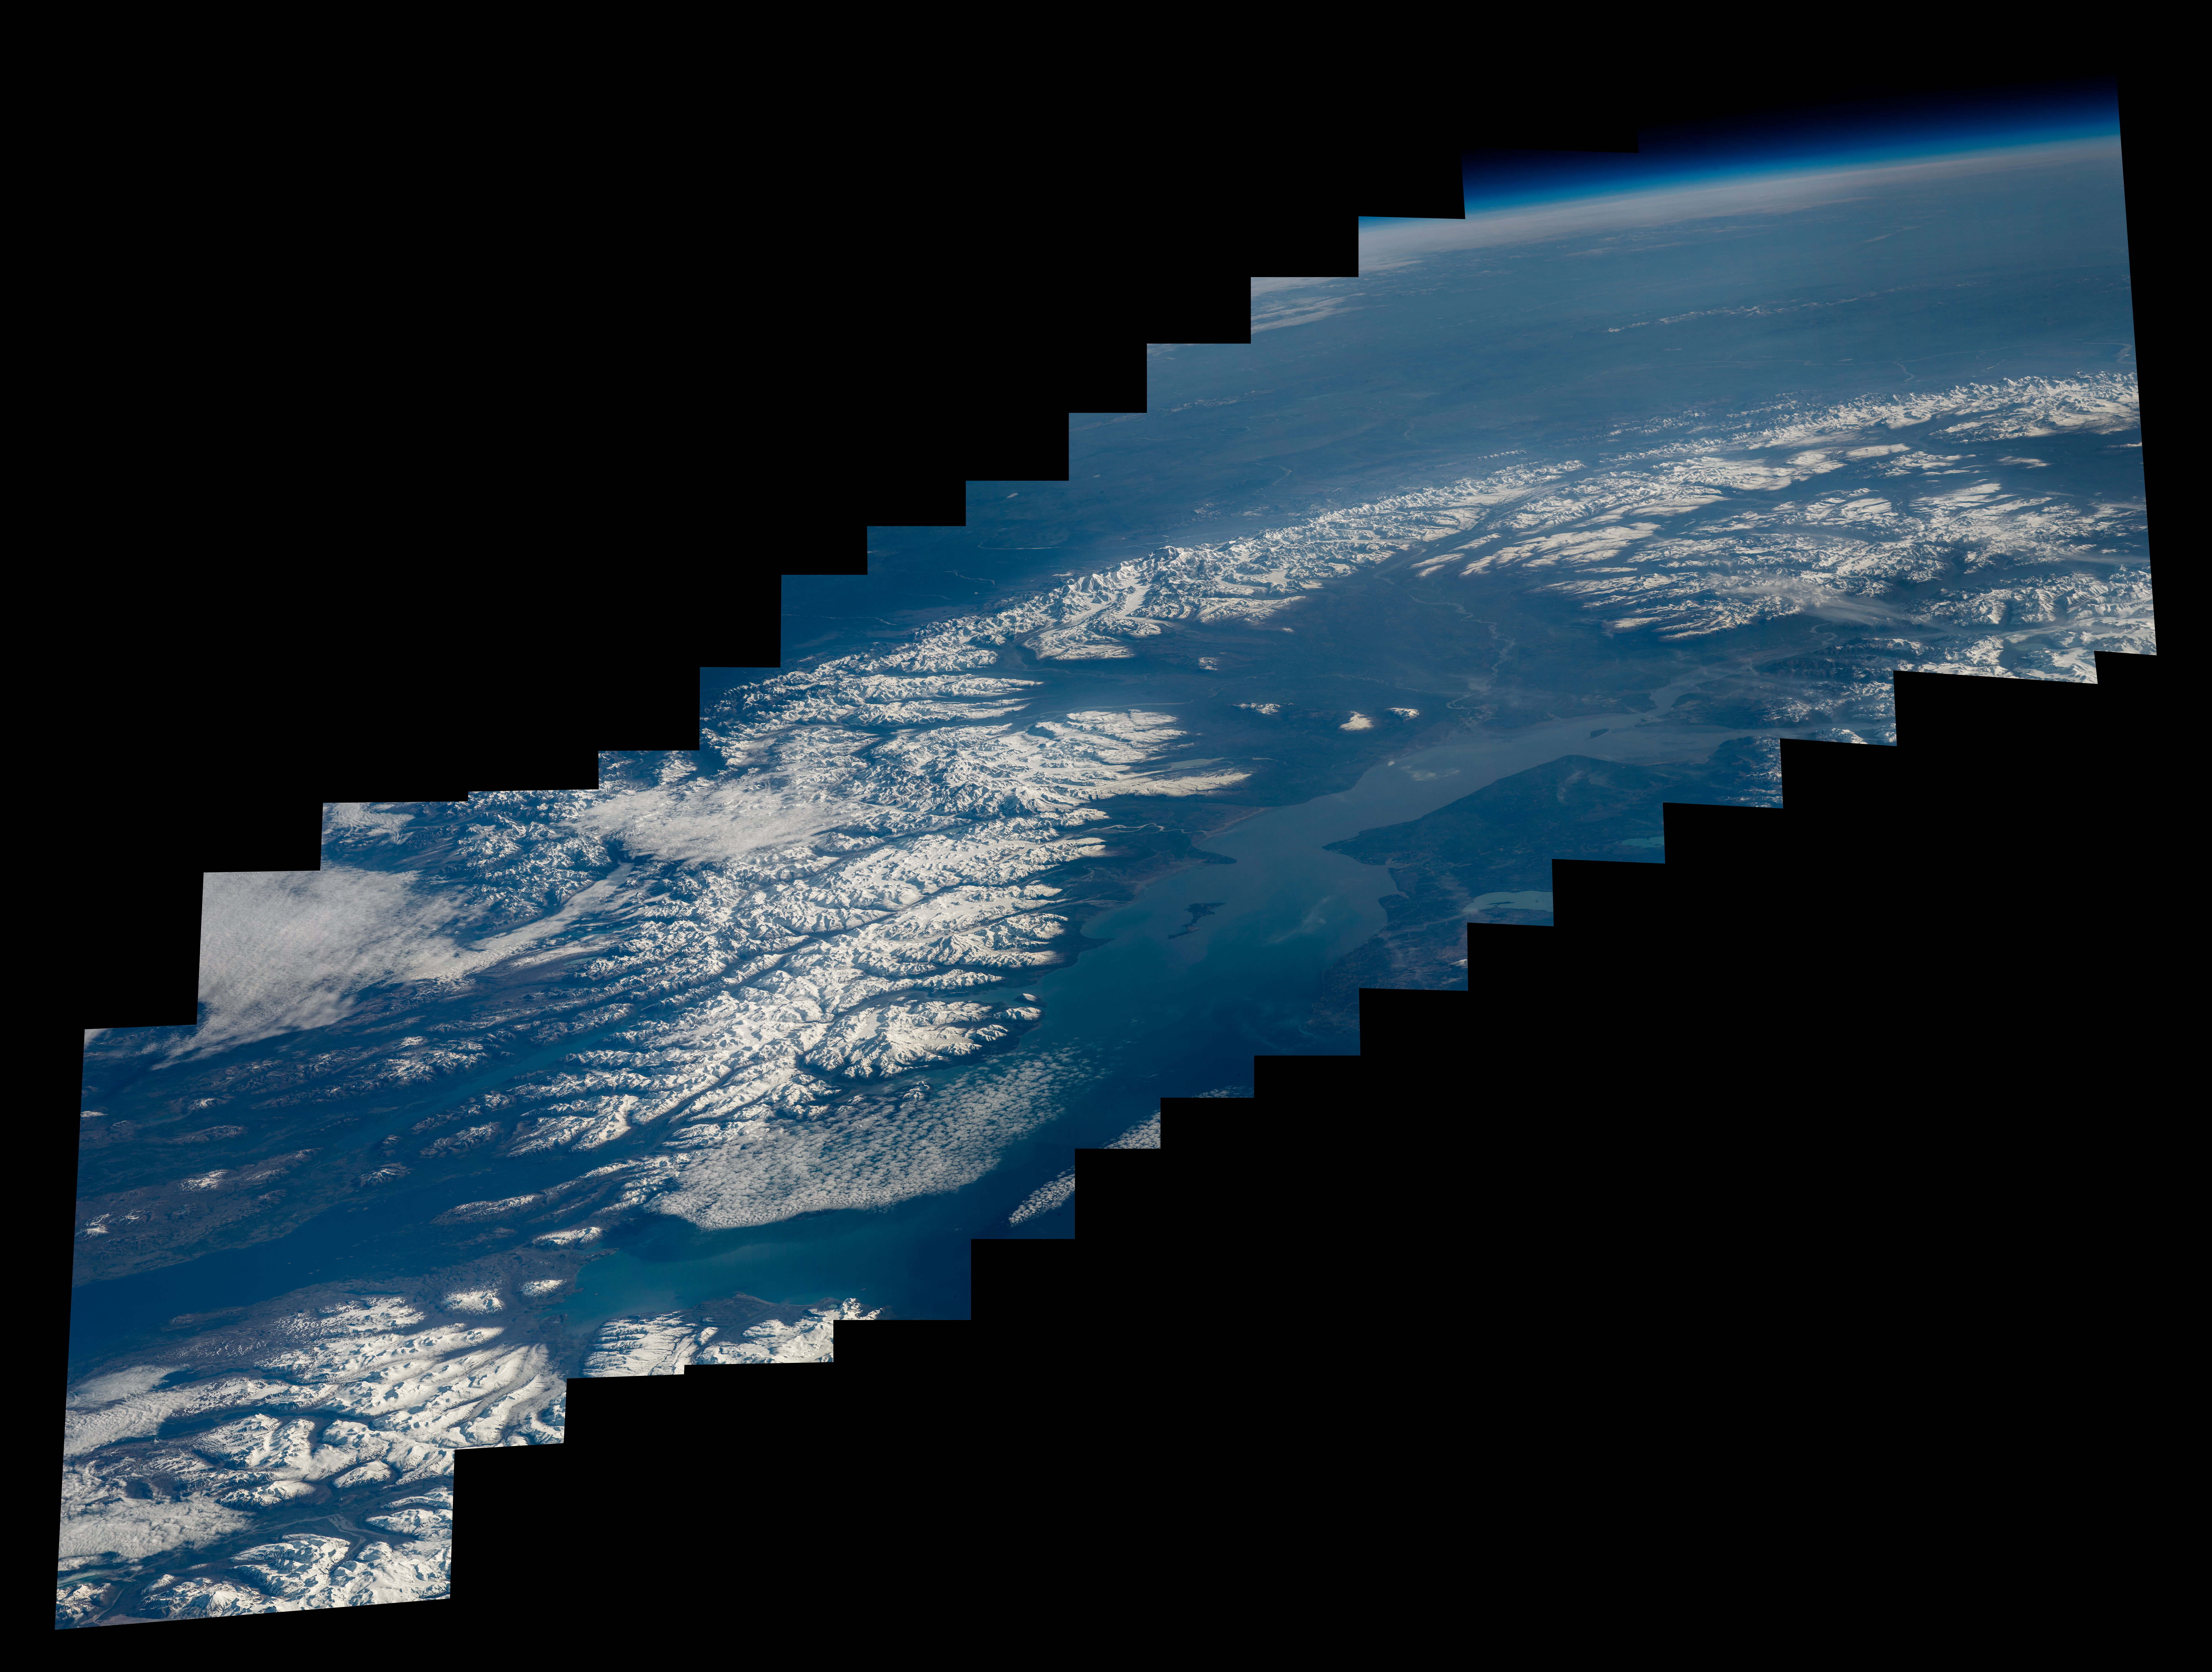 Alaska Range, Mount McKinley, and Anchorage, AK